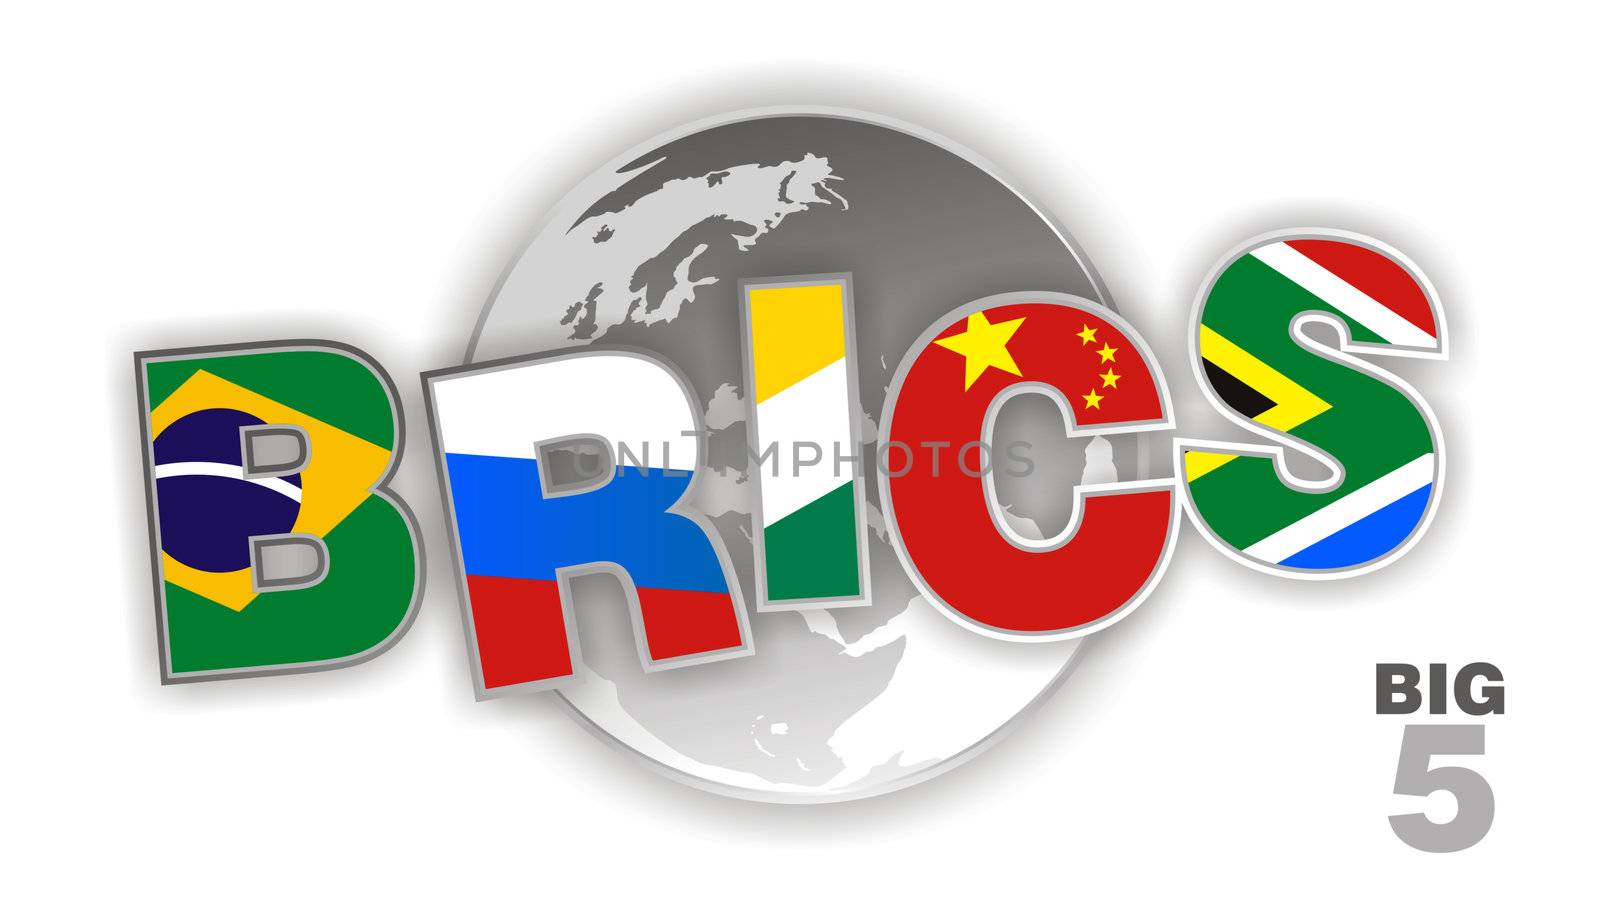 BRICS symbolic representation by kvinoz